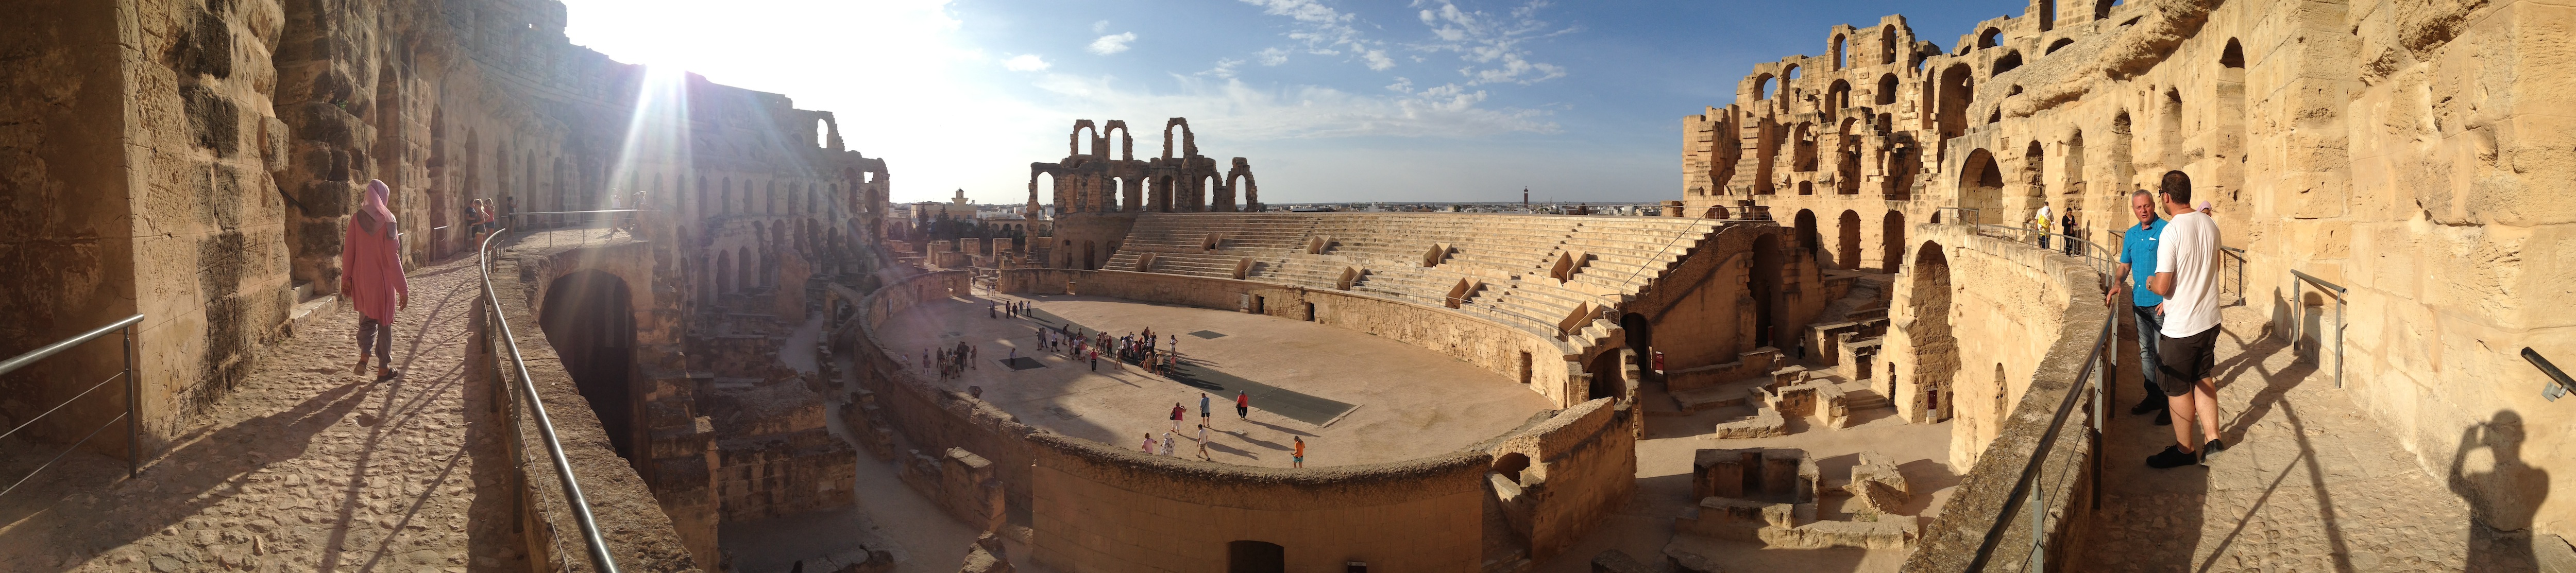 photos panoramiques iPhone, Ã©pisode 4 : USA, Tunisie, Londres, Maroc ...